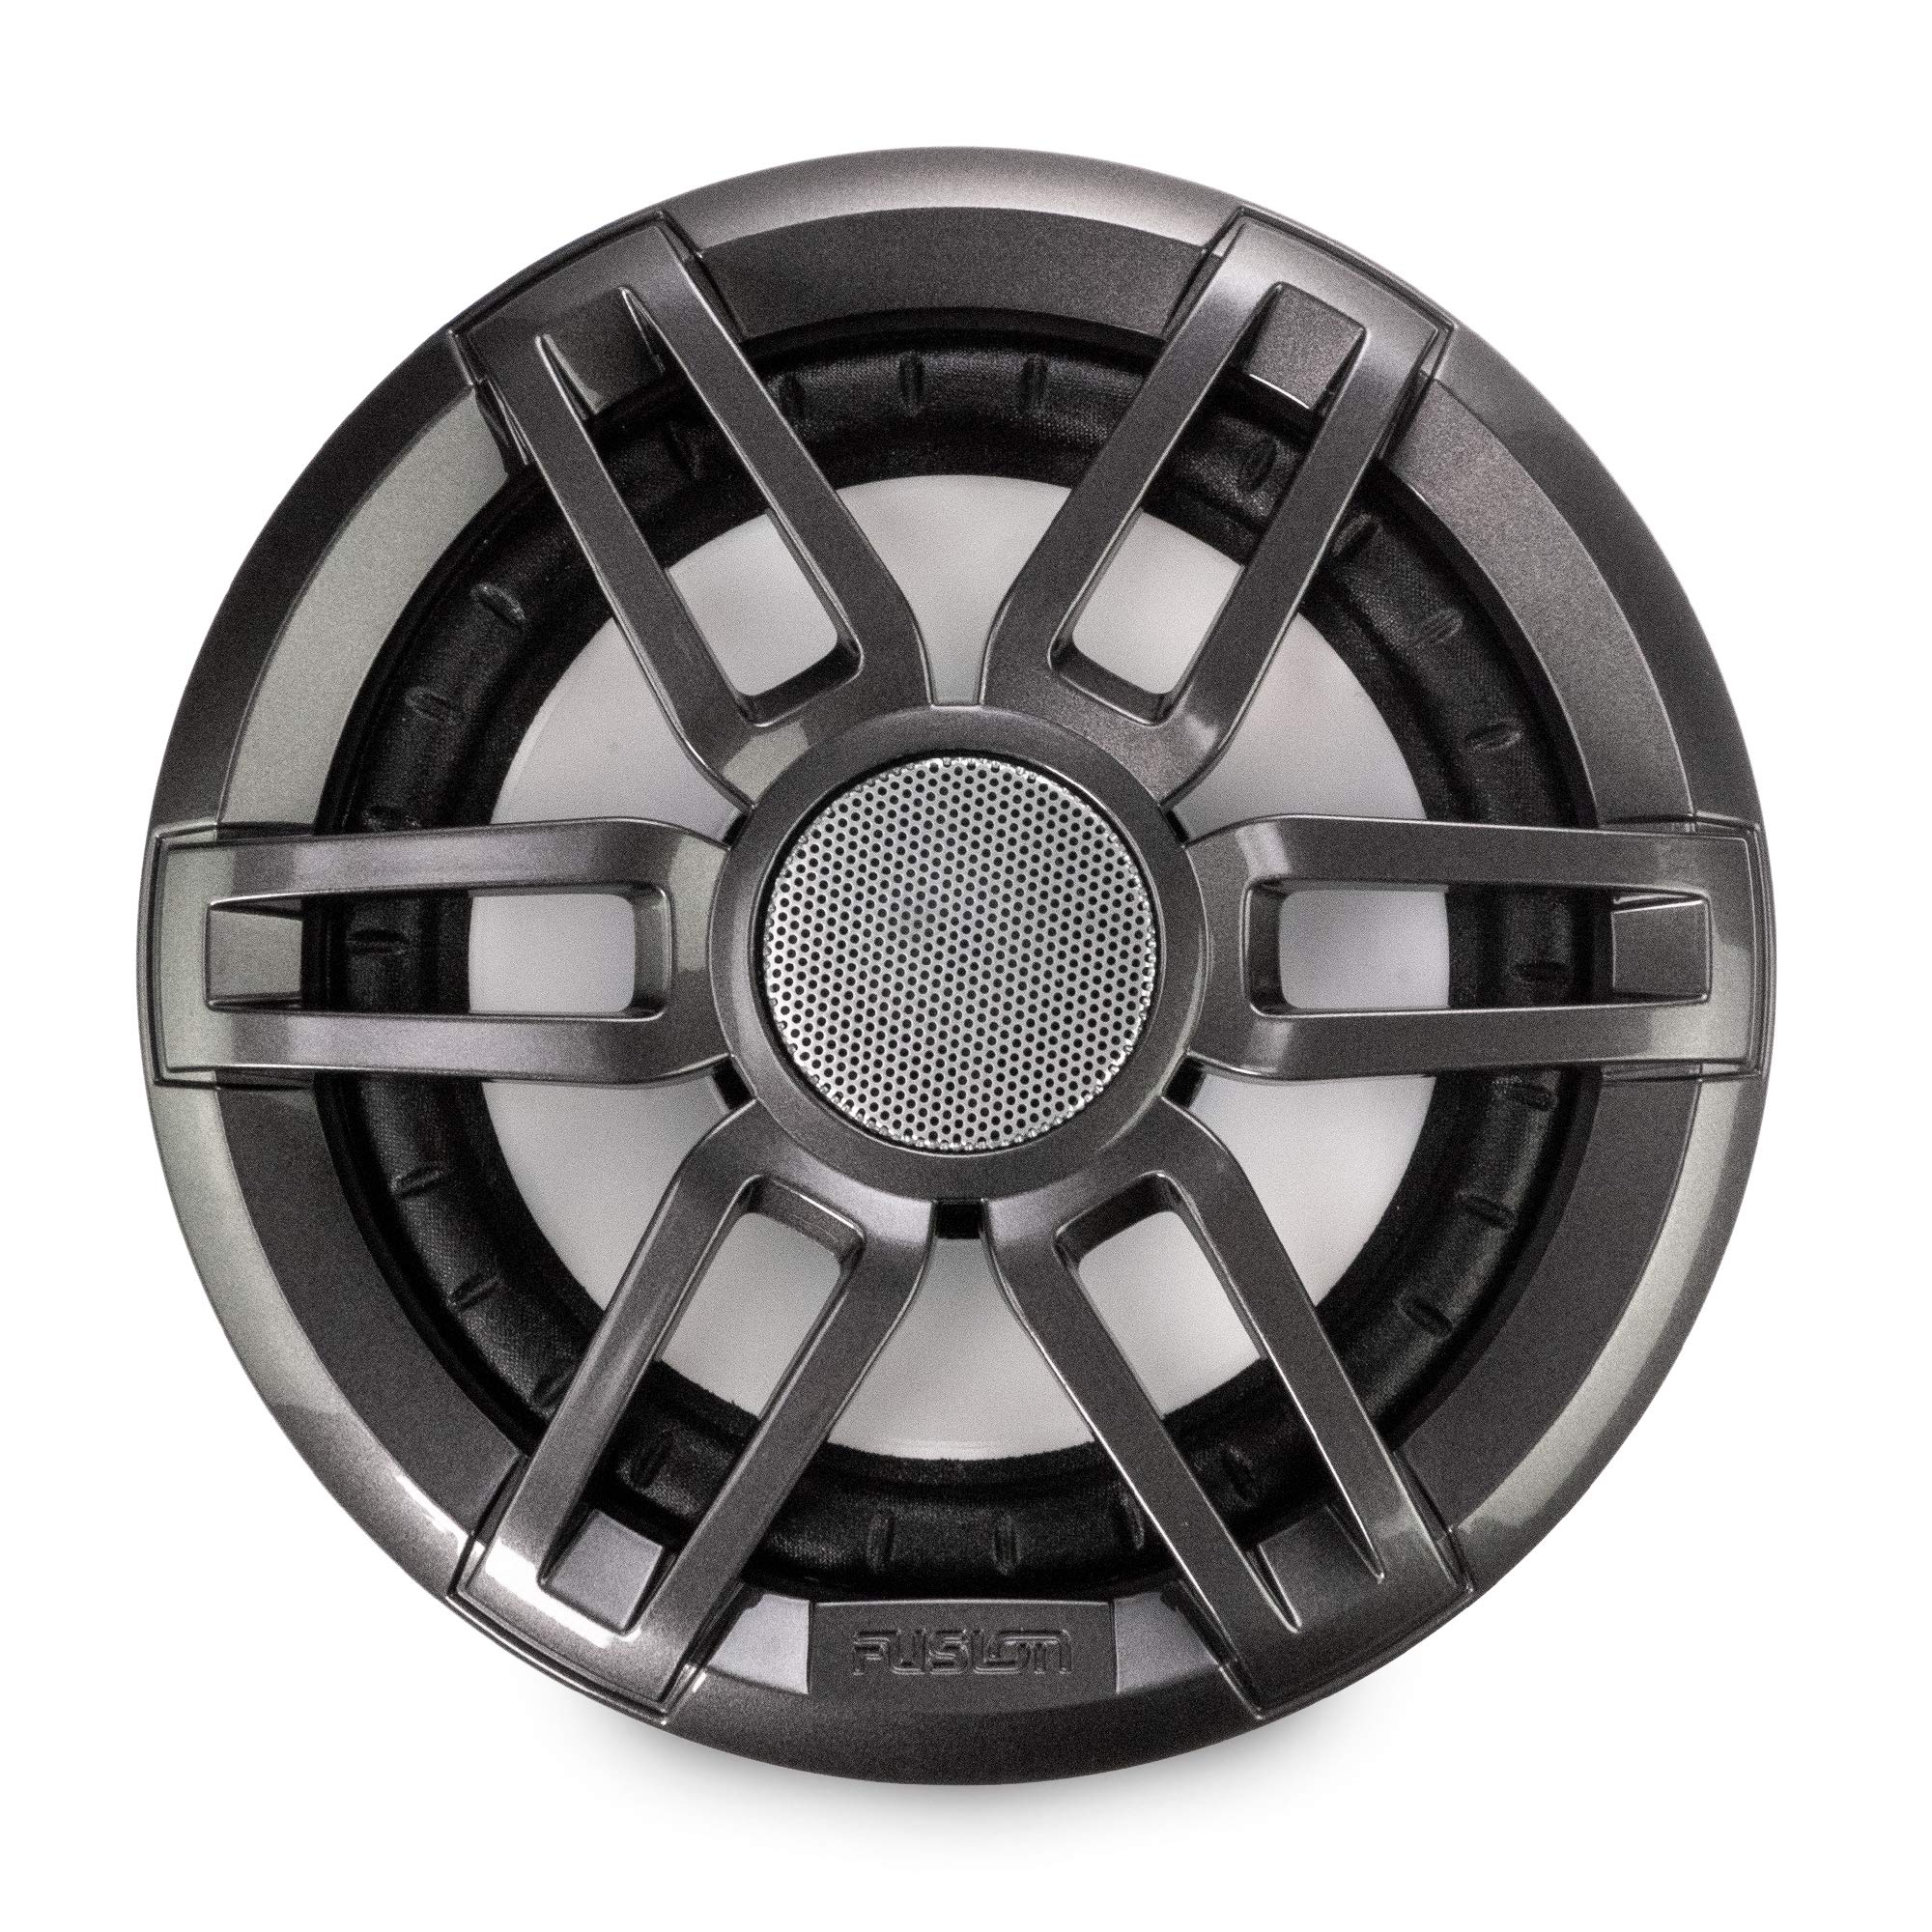 Fusion XS Series Marine Speakers, 6.5